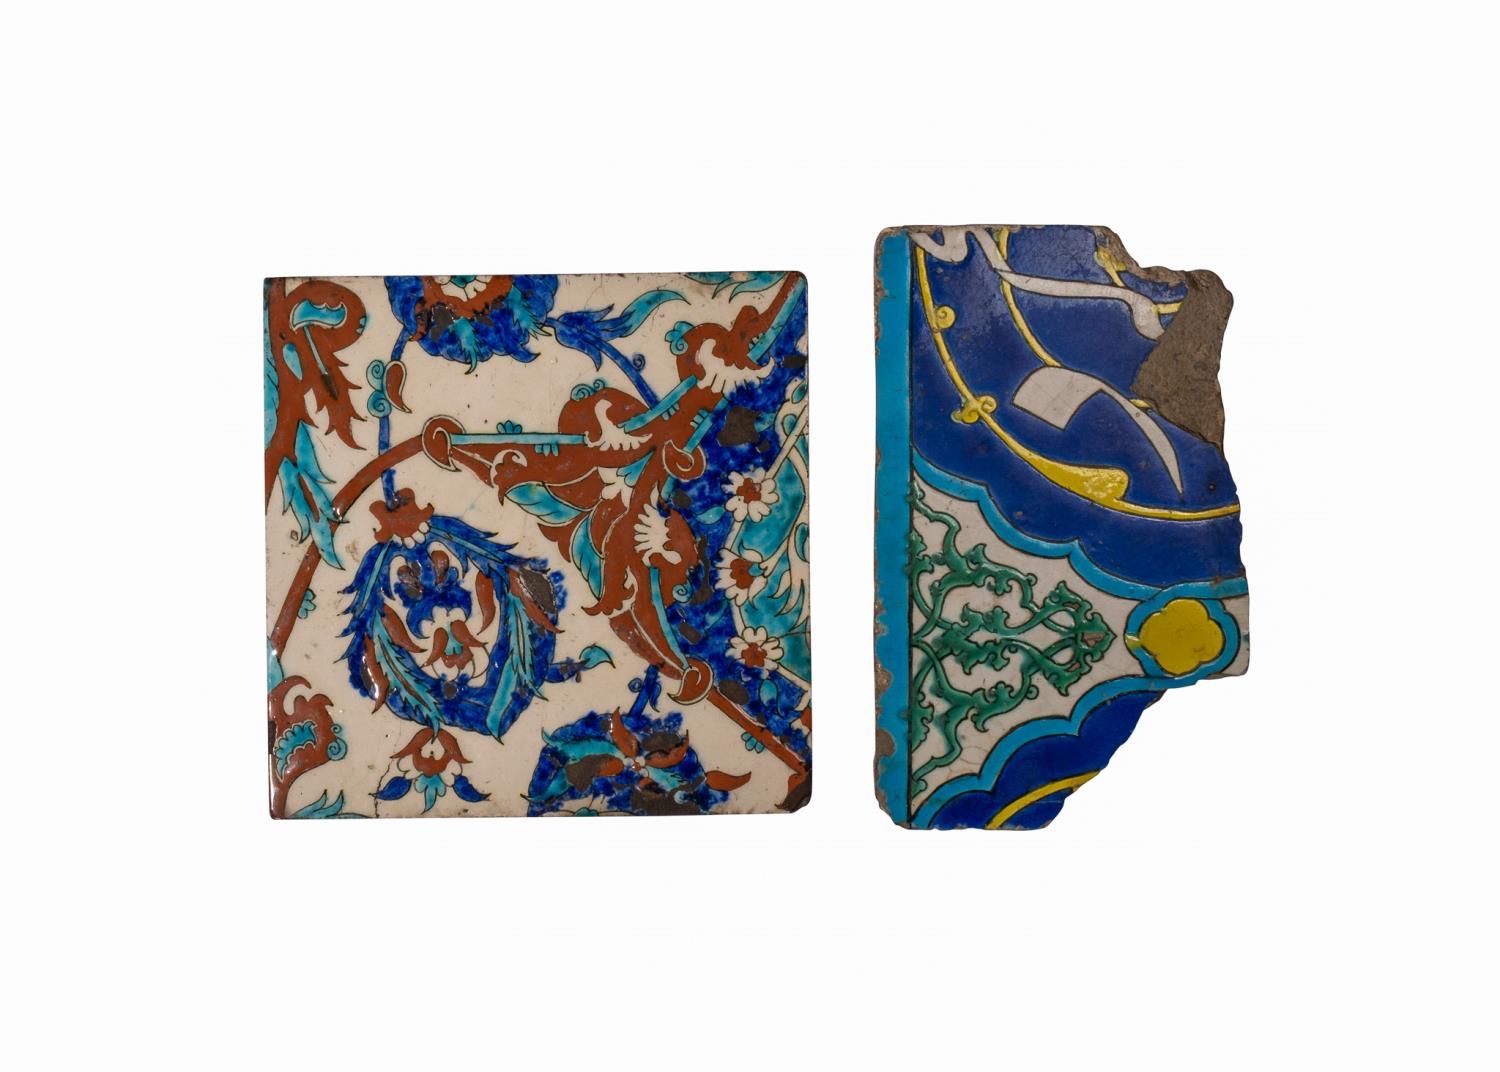 Null 两块奥托曼爱奥尼亚克瓷砖，16世纪及以后
 
 两块爱奥尼亚克瓷砖，呈正方形，第一块是大构图的一部分，在白地上用红色、钴蓝色和绿松石装饰，一个起伏的卷&hellip;